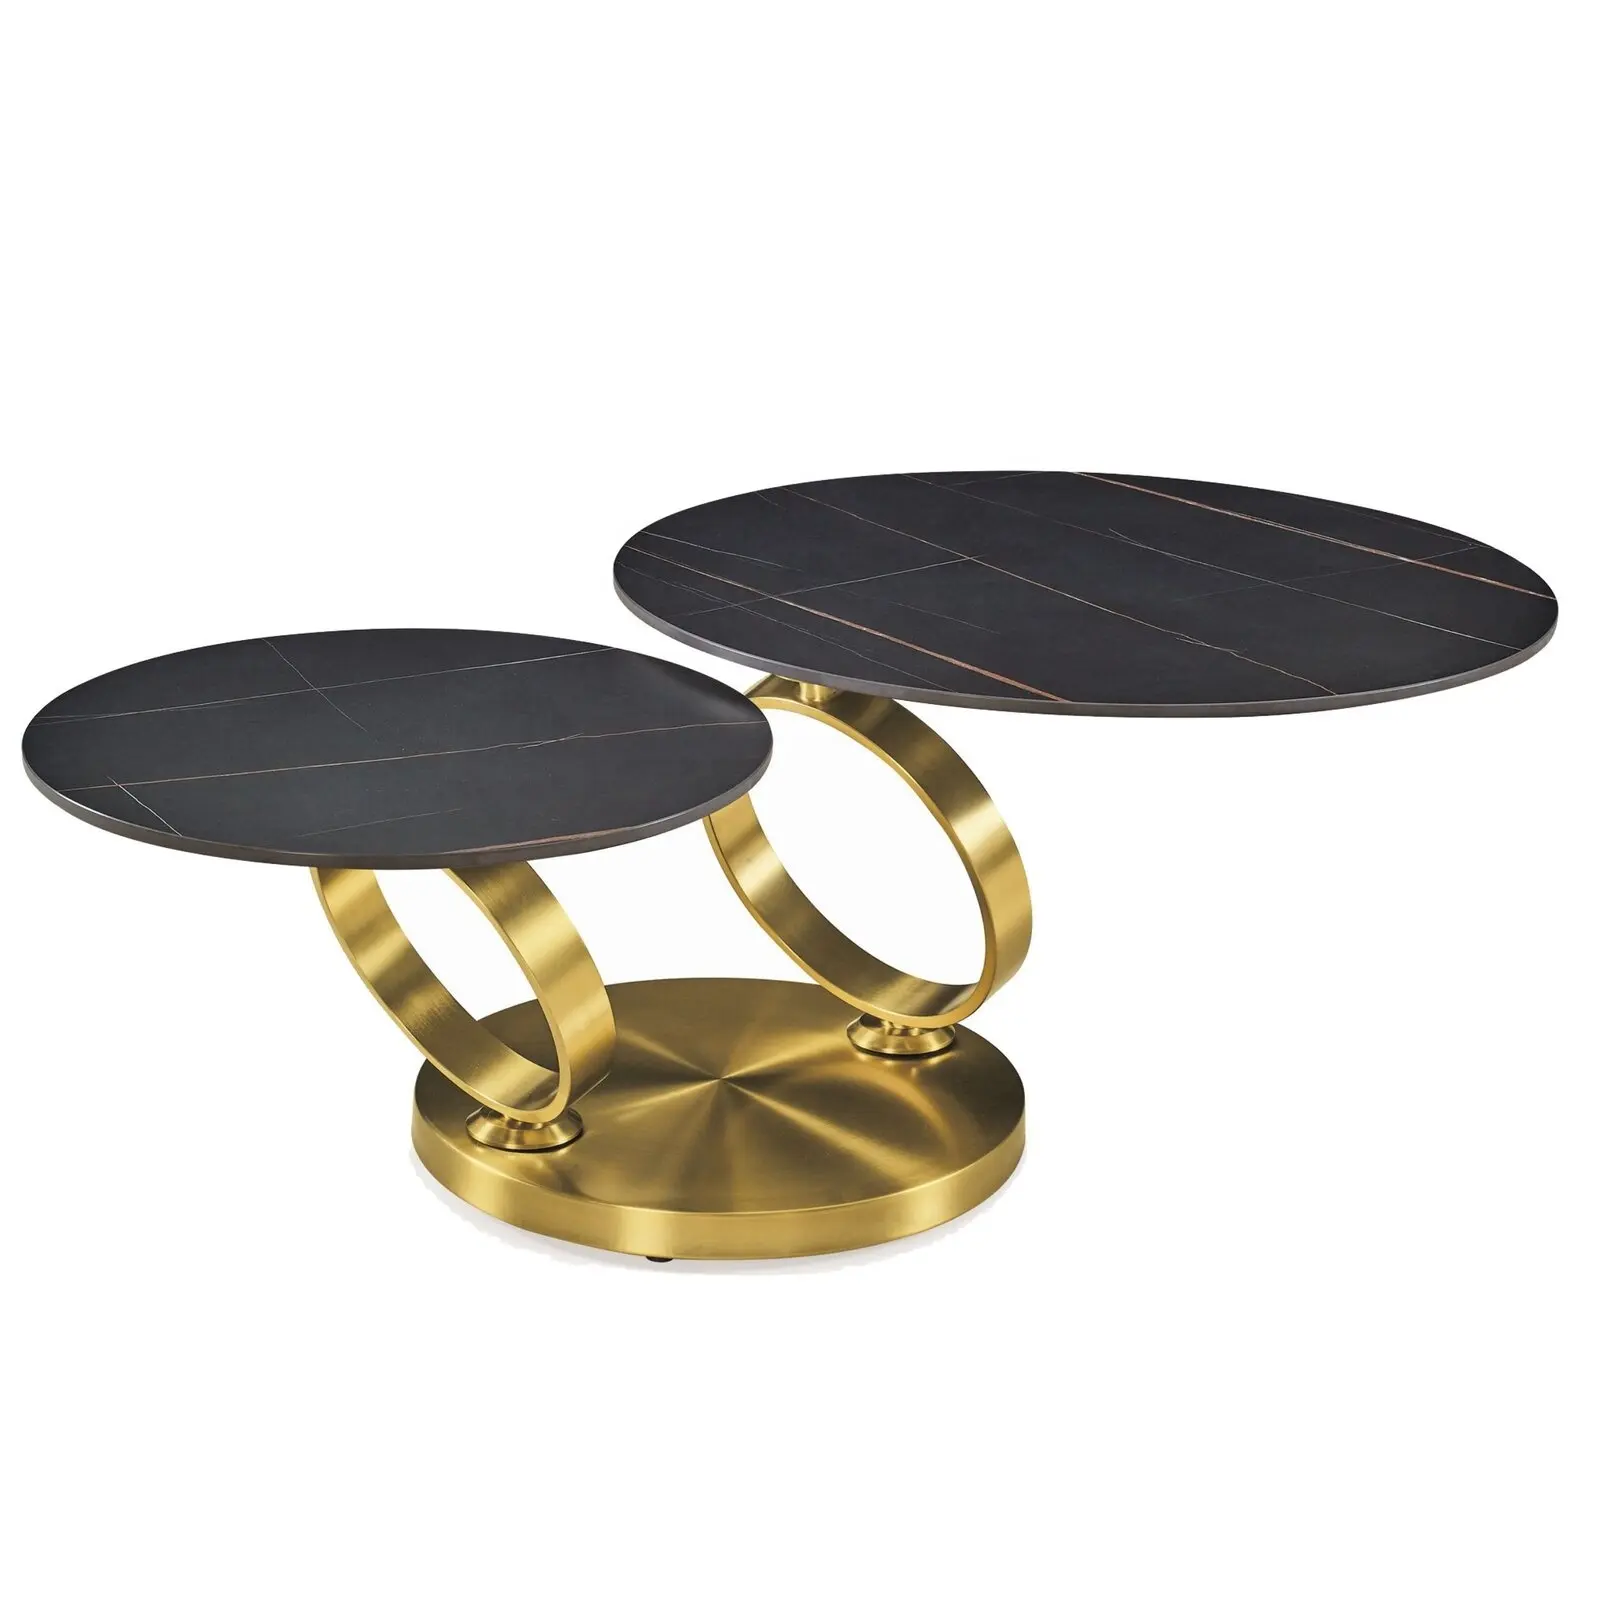 Living Room furniture Vintage Furniture Design Black Ceramic Stone Top Gold Metal Frame Round Coffee Side Tables